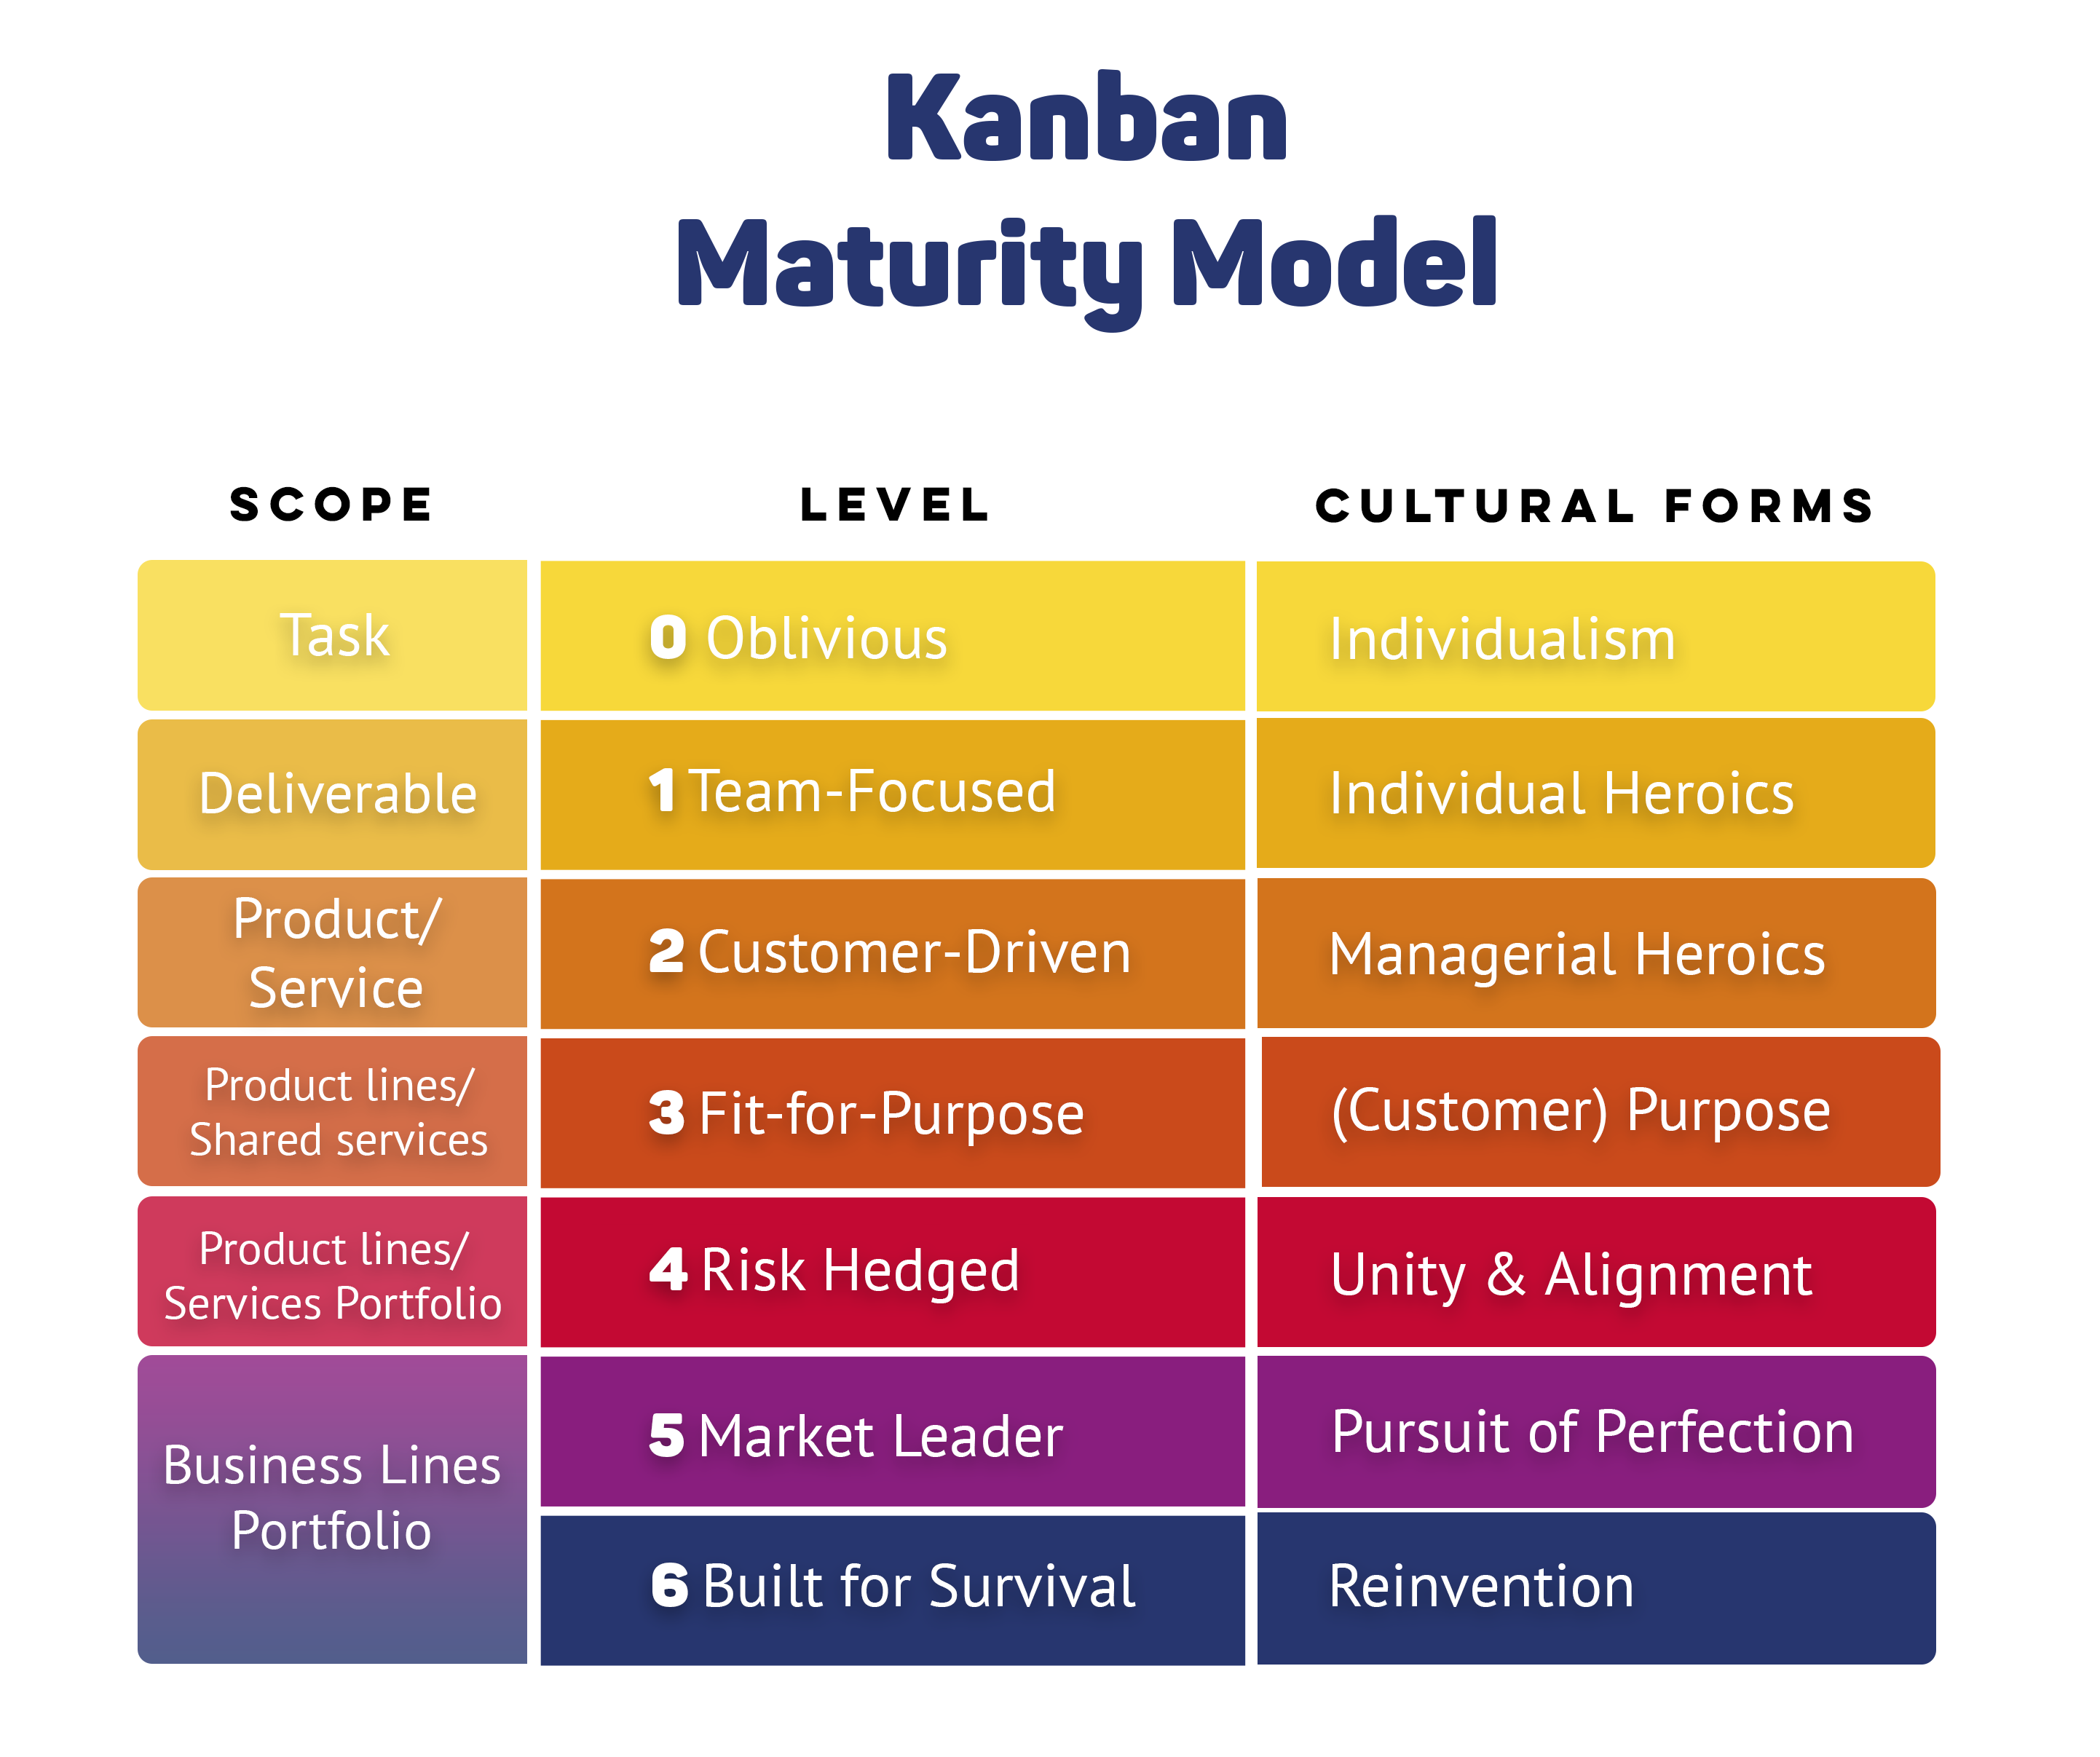 Kanban Maturity Model with David J Anderson